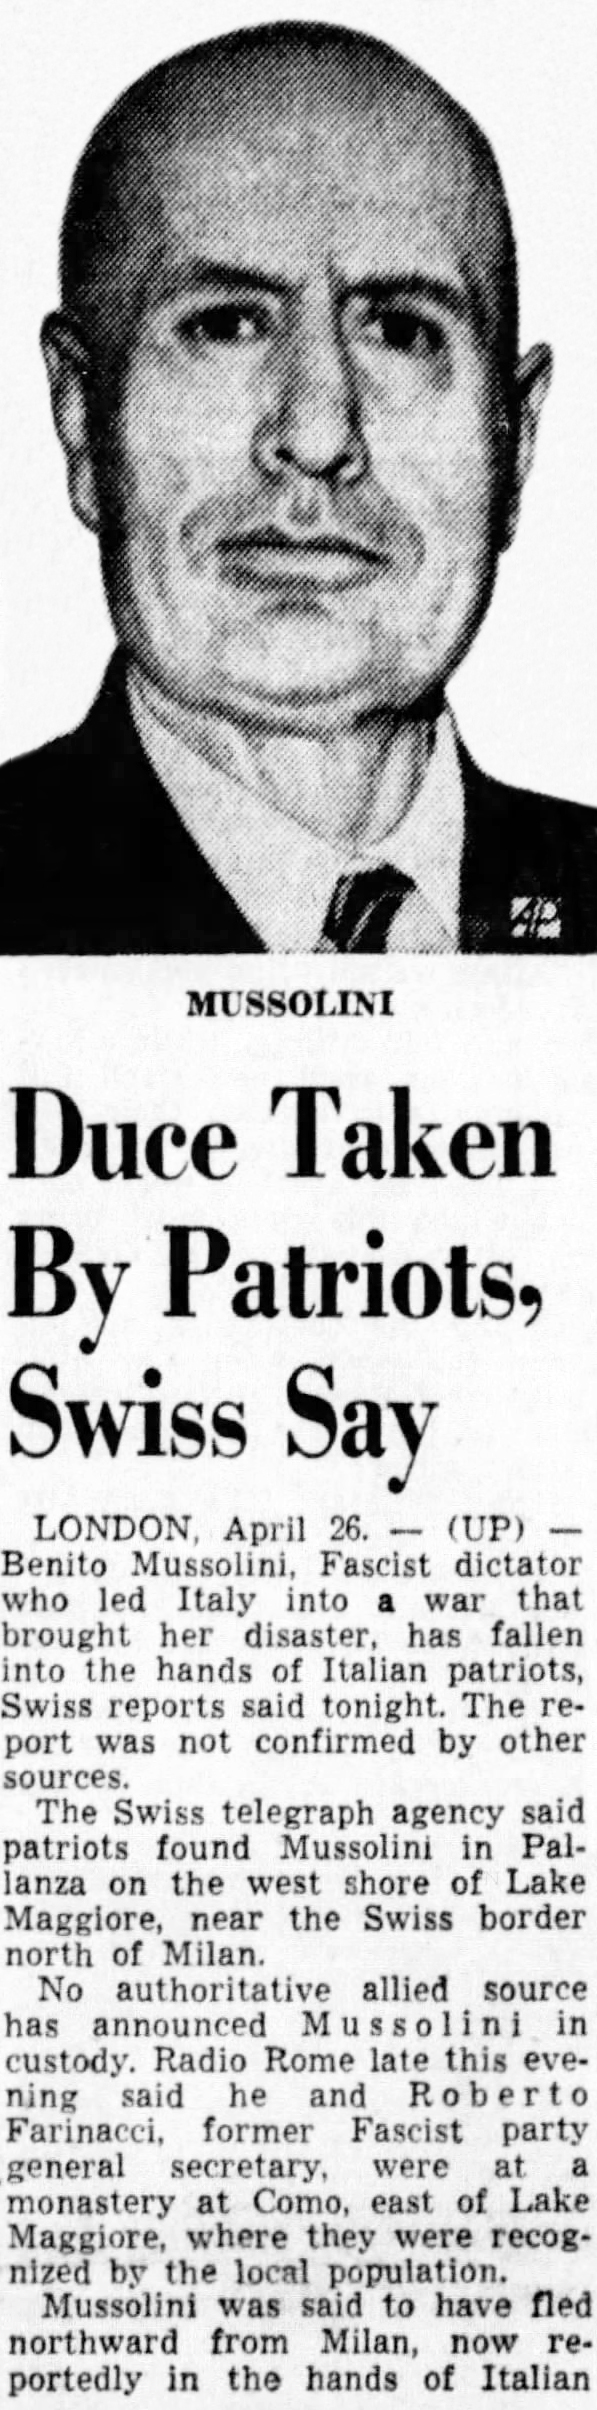 benito mussolini, april 1945, italy, world war two, wwii, italian dictator, fascist, april 27, newspaper headlines, mussolini captured reports